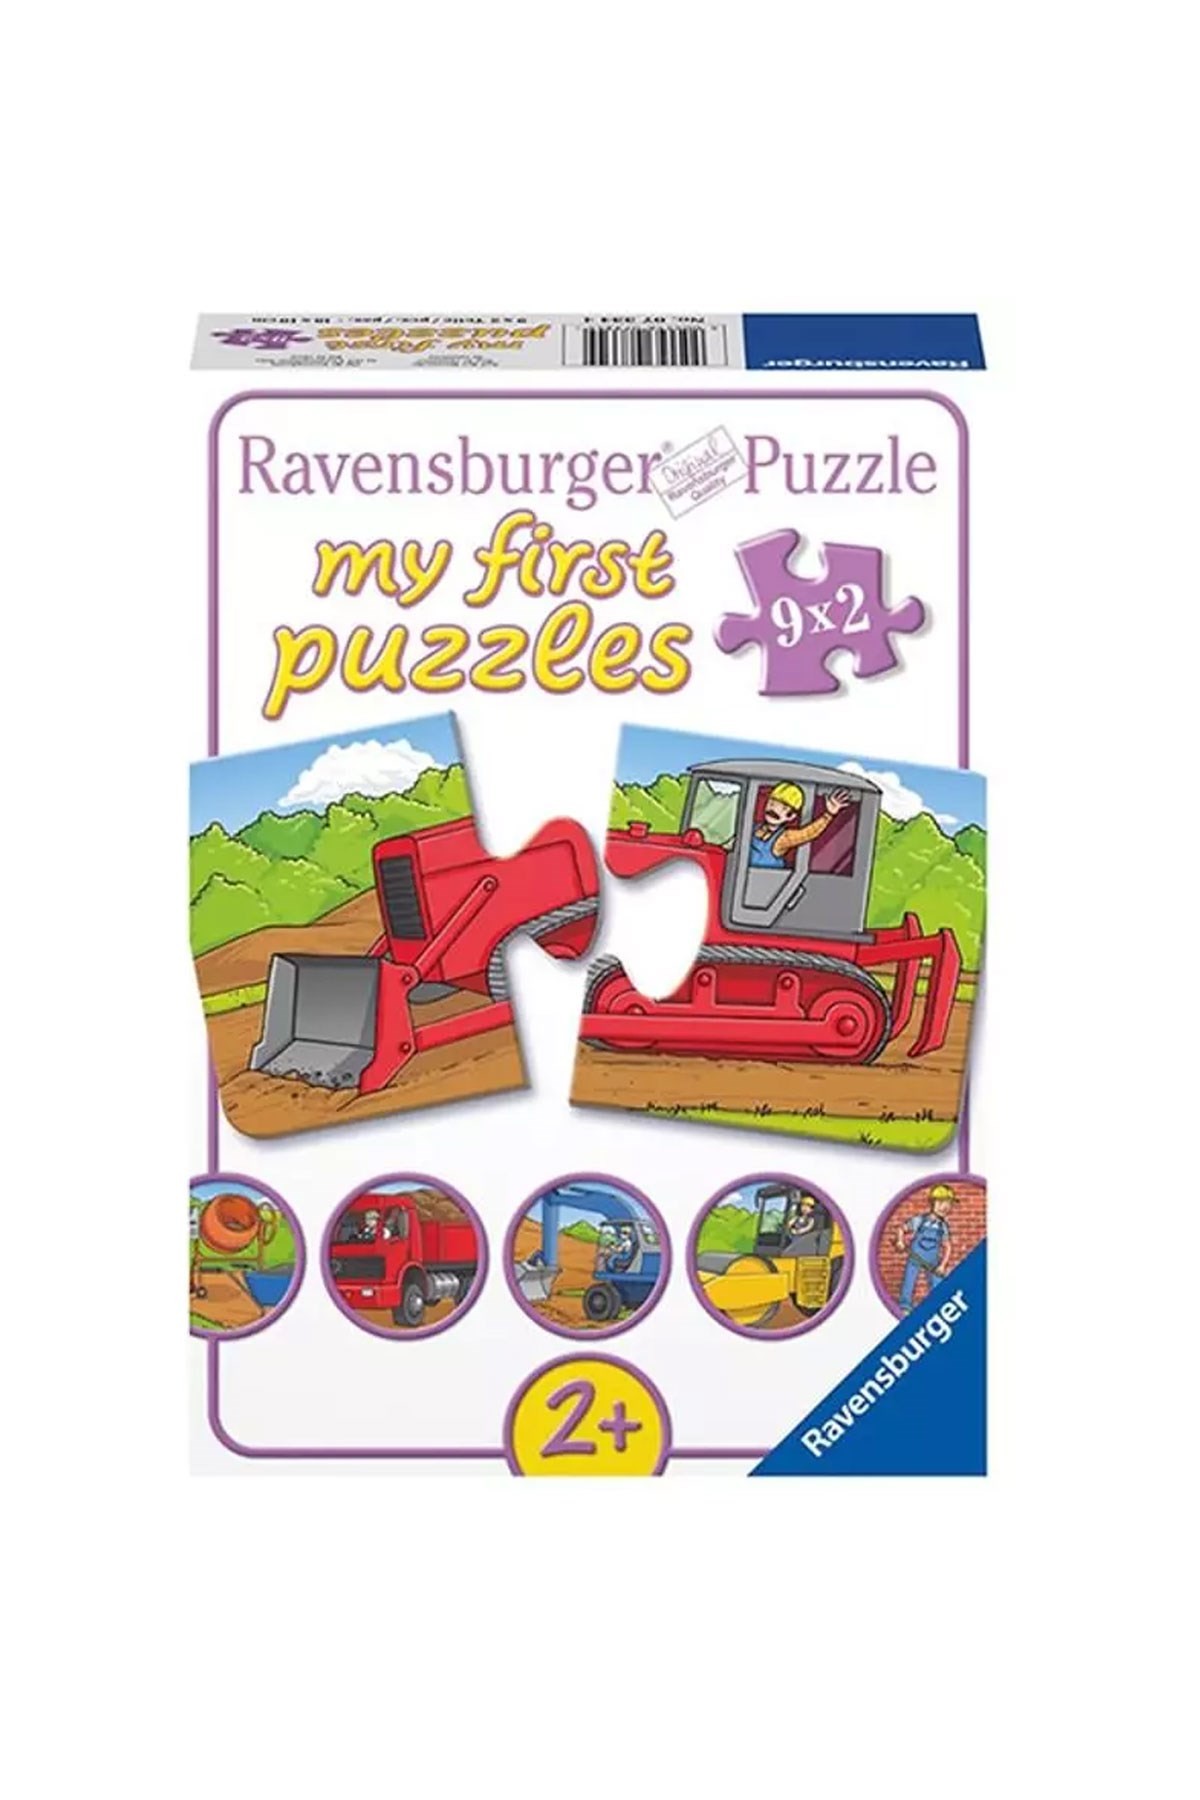 Ravensburger İlk Puzzle Çiftlik 9x2 Parça